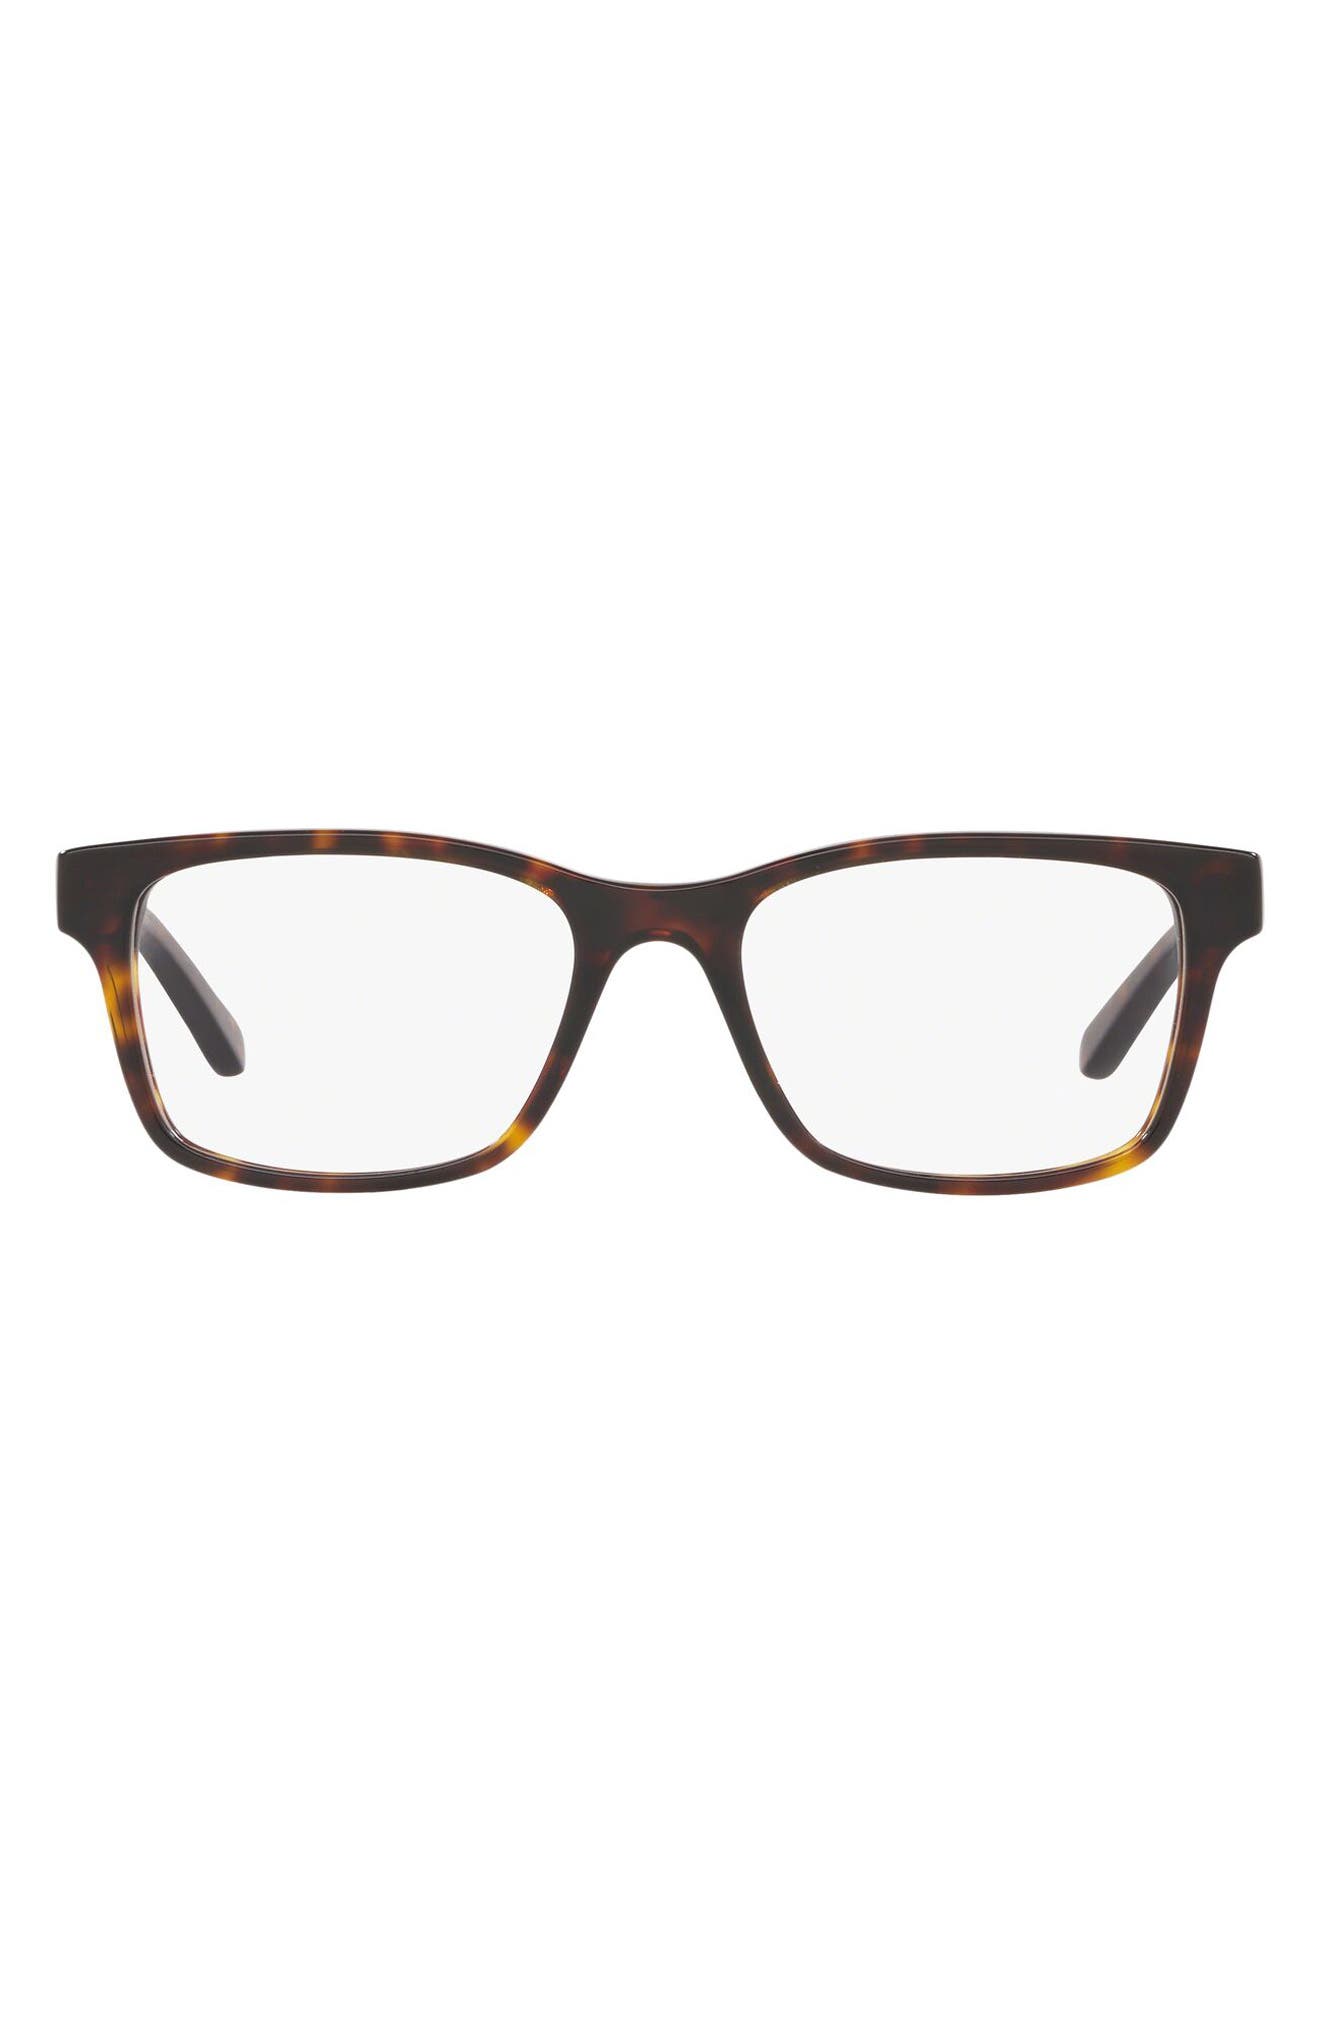 Tory Burch 52mm Rectangle Optical Glasses in Dark Tort